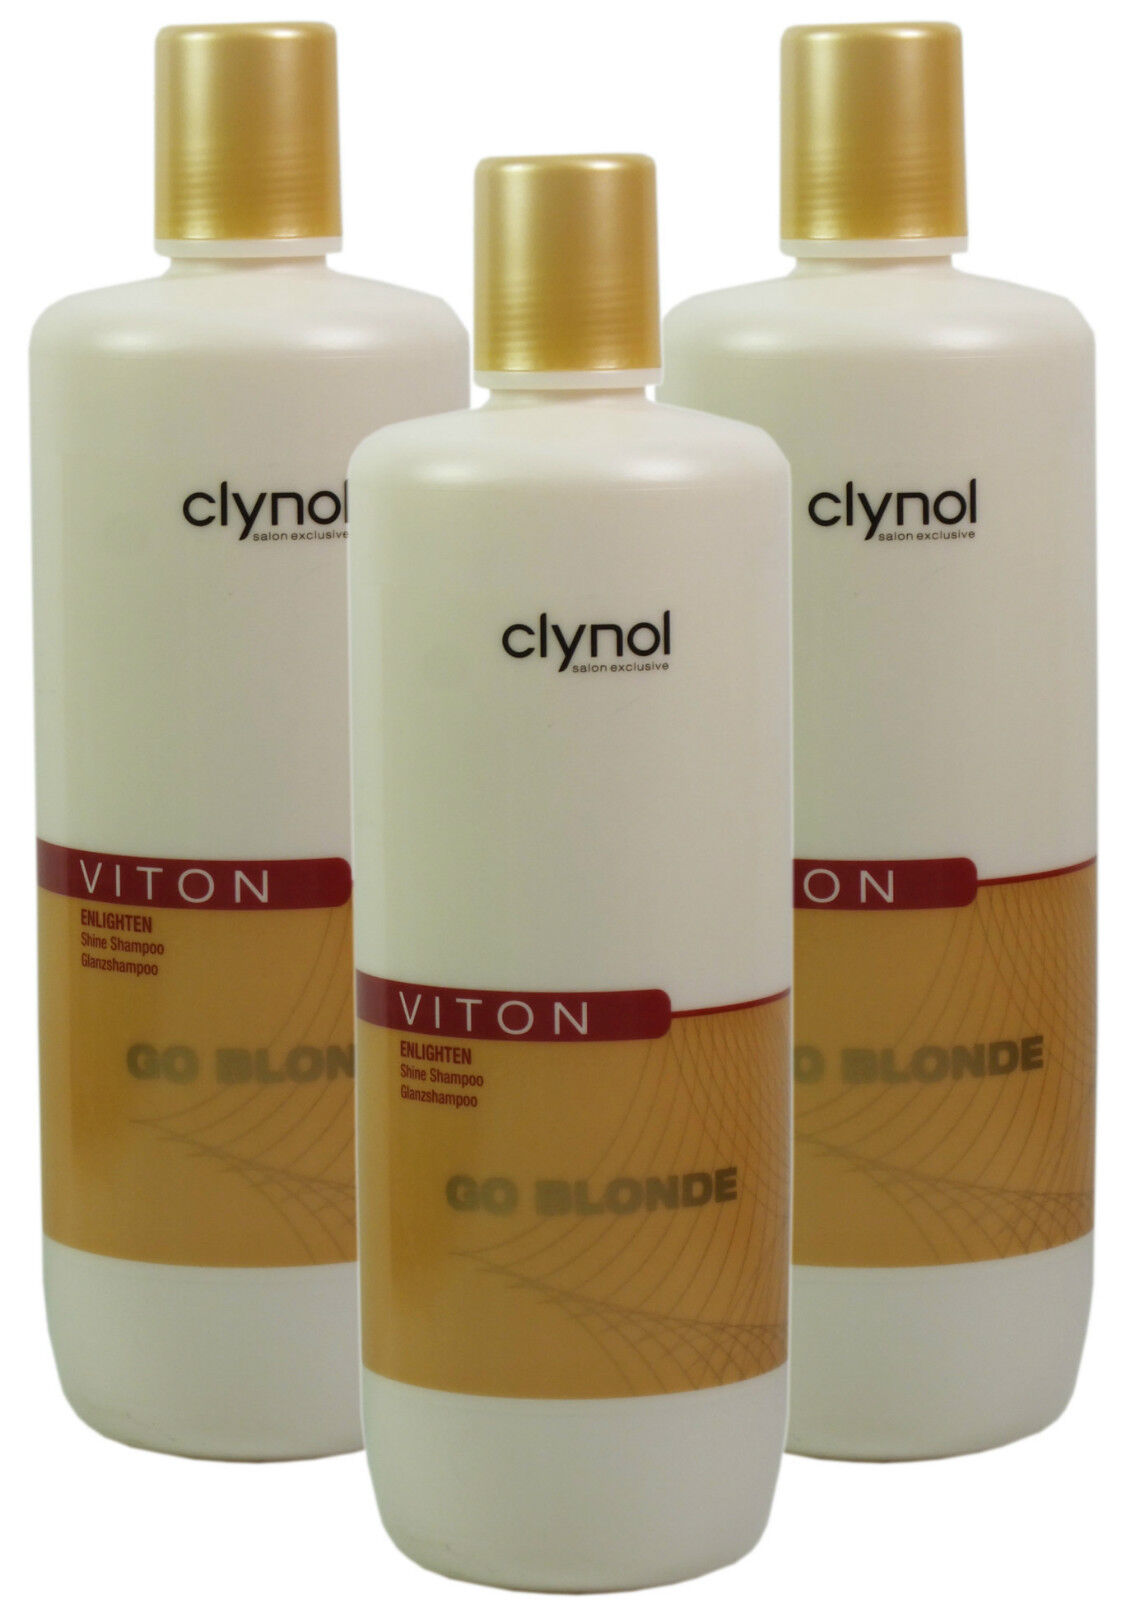 3x Clynol Viton Go Blonde Enlighten Shine Shampoo 1 Litre